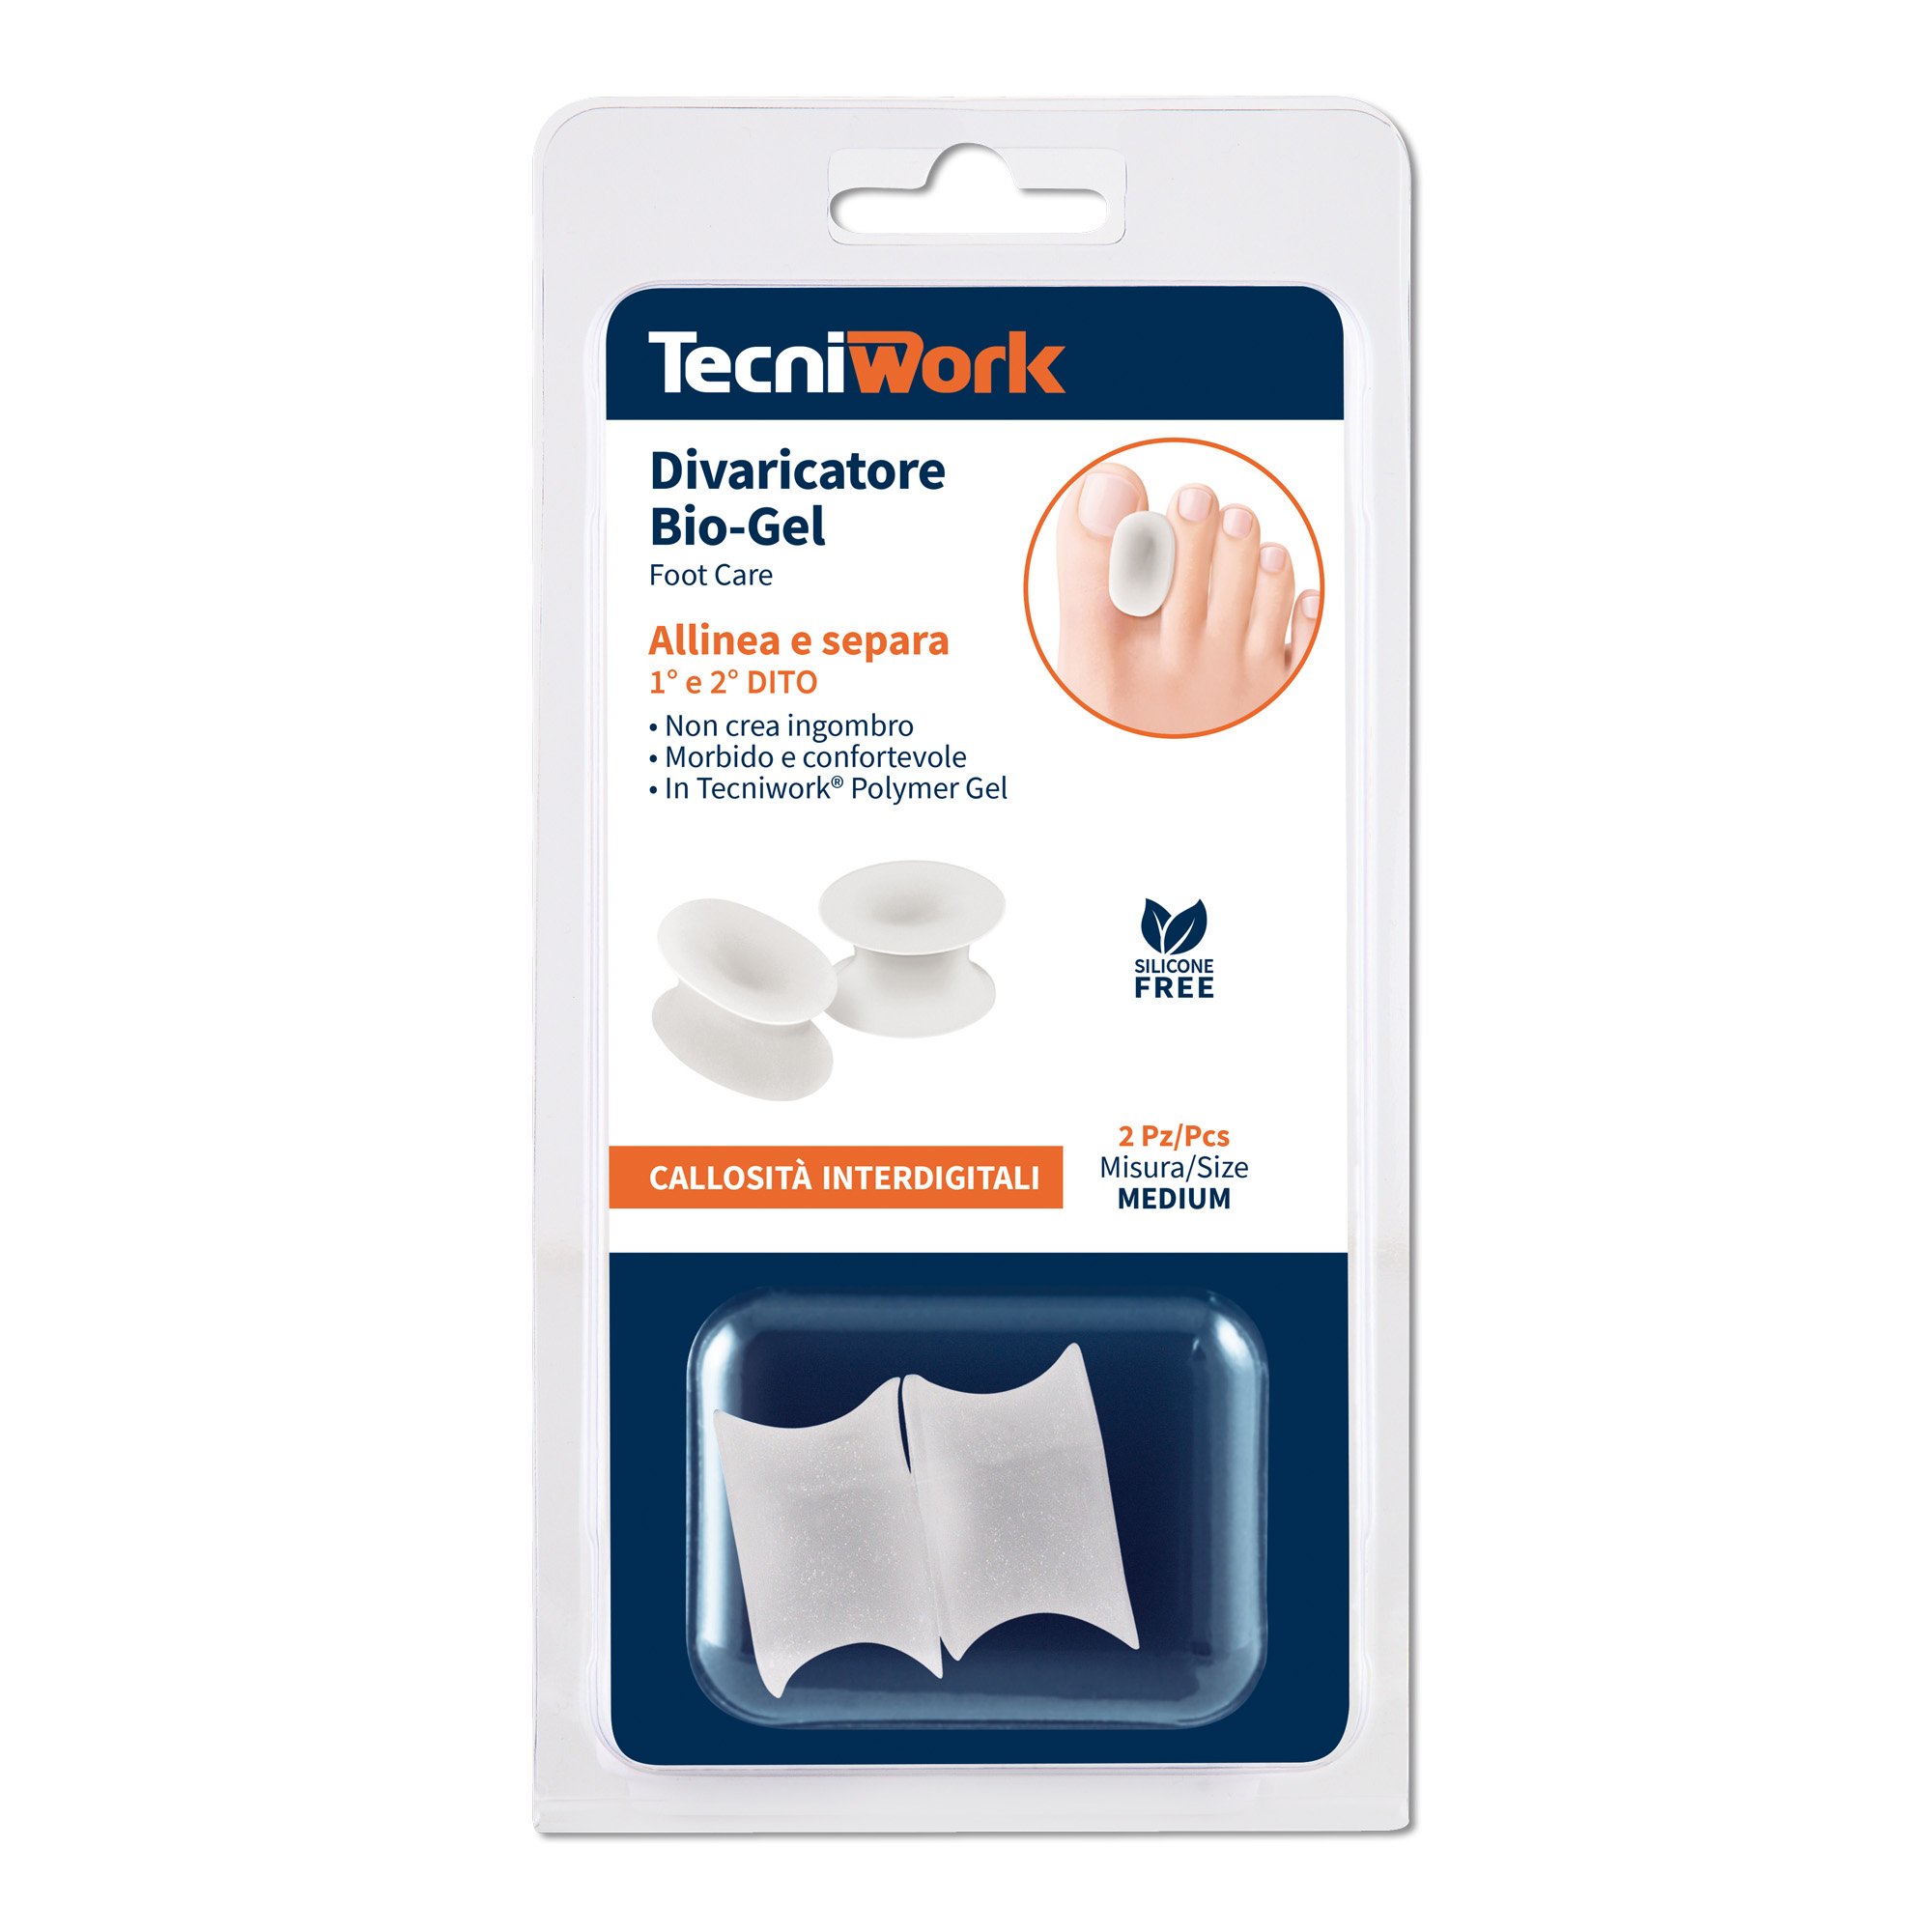 Toe spreader Bio-Gel in Tecniwork® Polymer Gel transparent size Medium 2 pcs